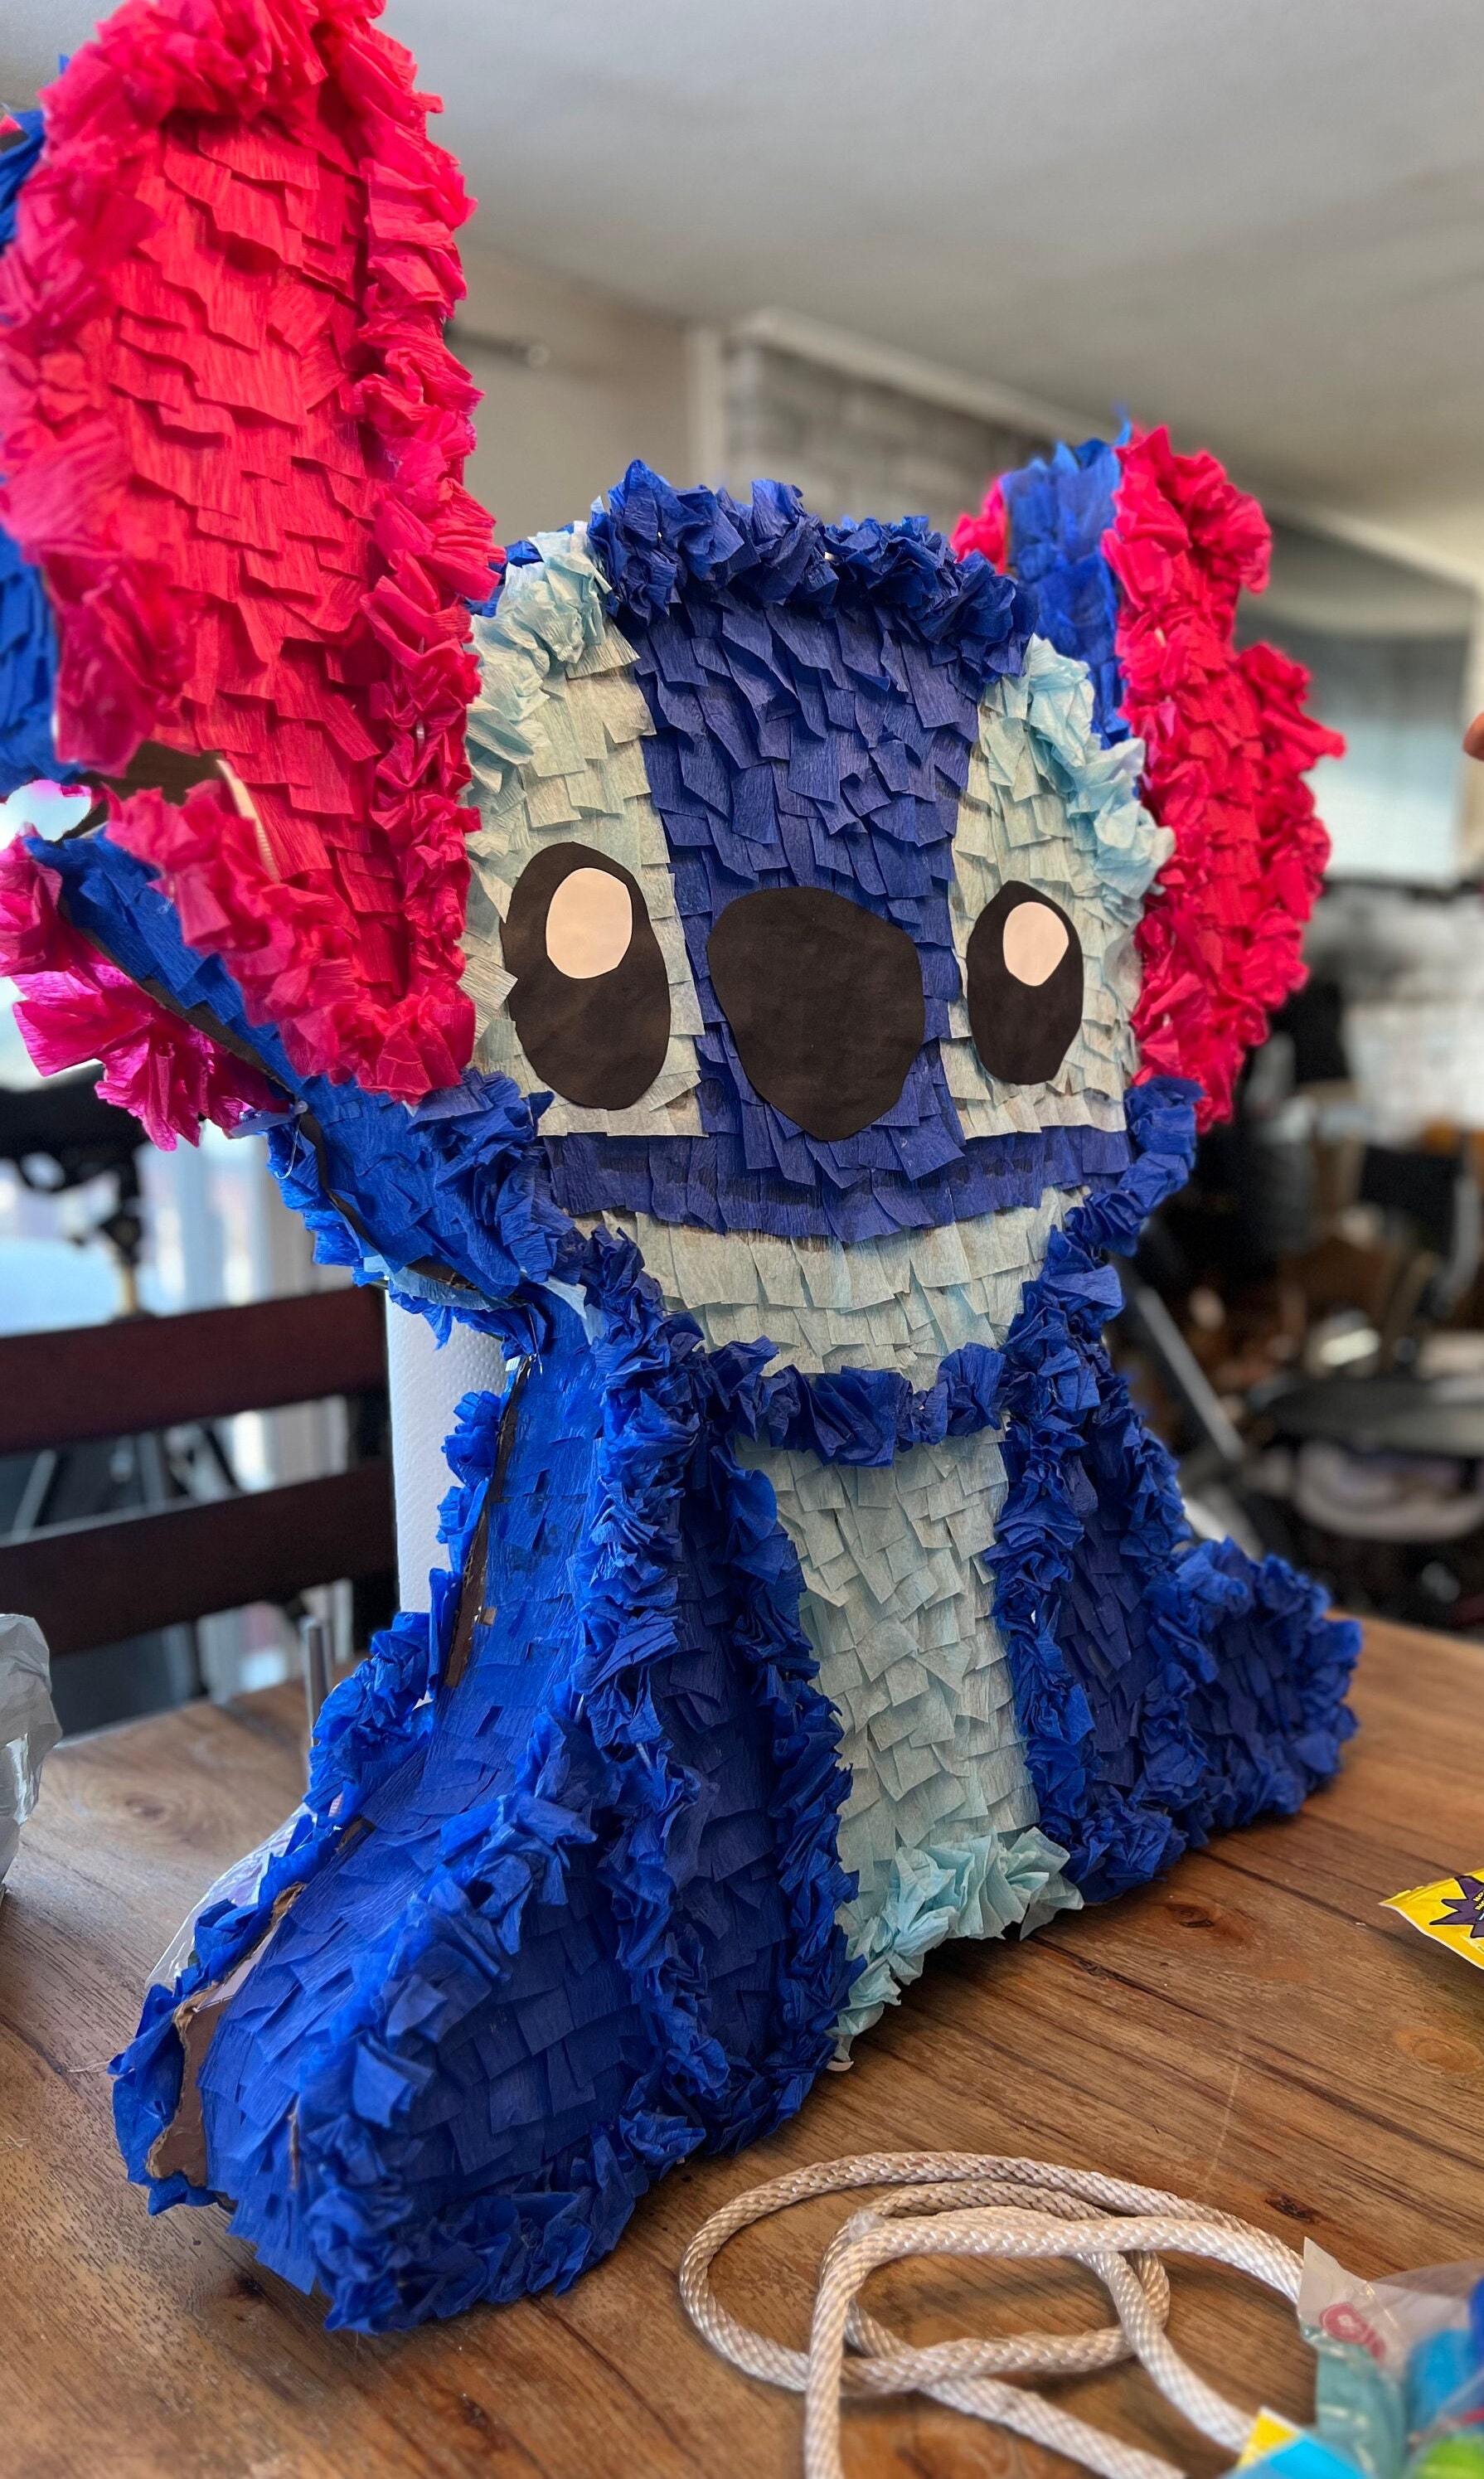 The making of a Stitch Piñata 😆 #mcdonaldshacks #fyp #pinata #liloand